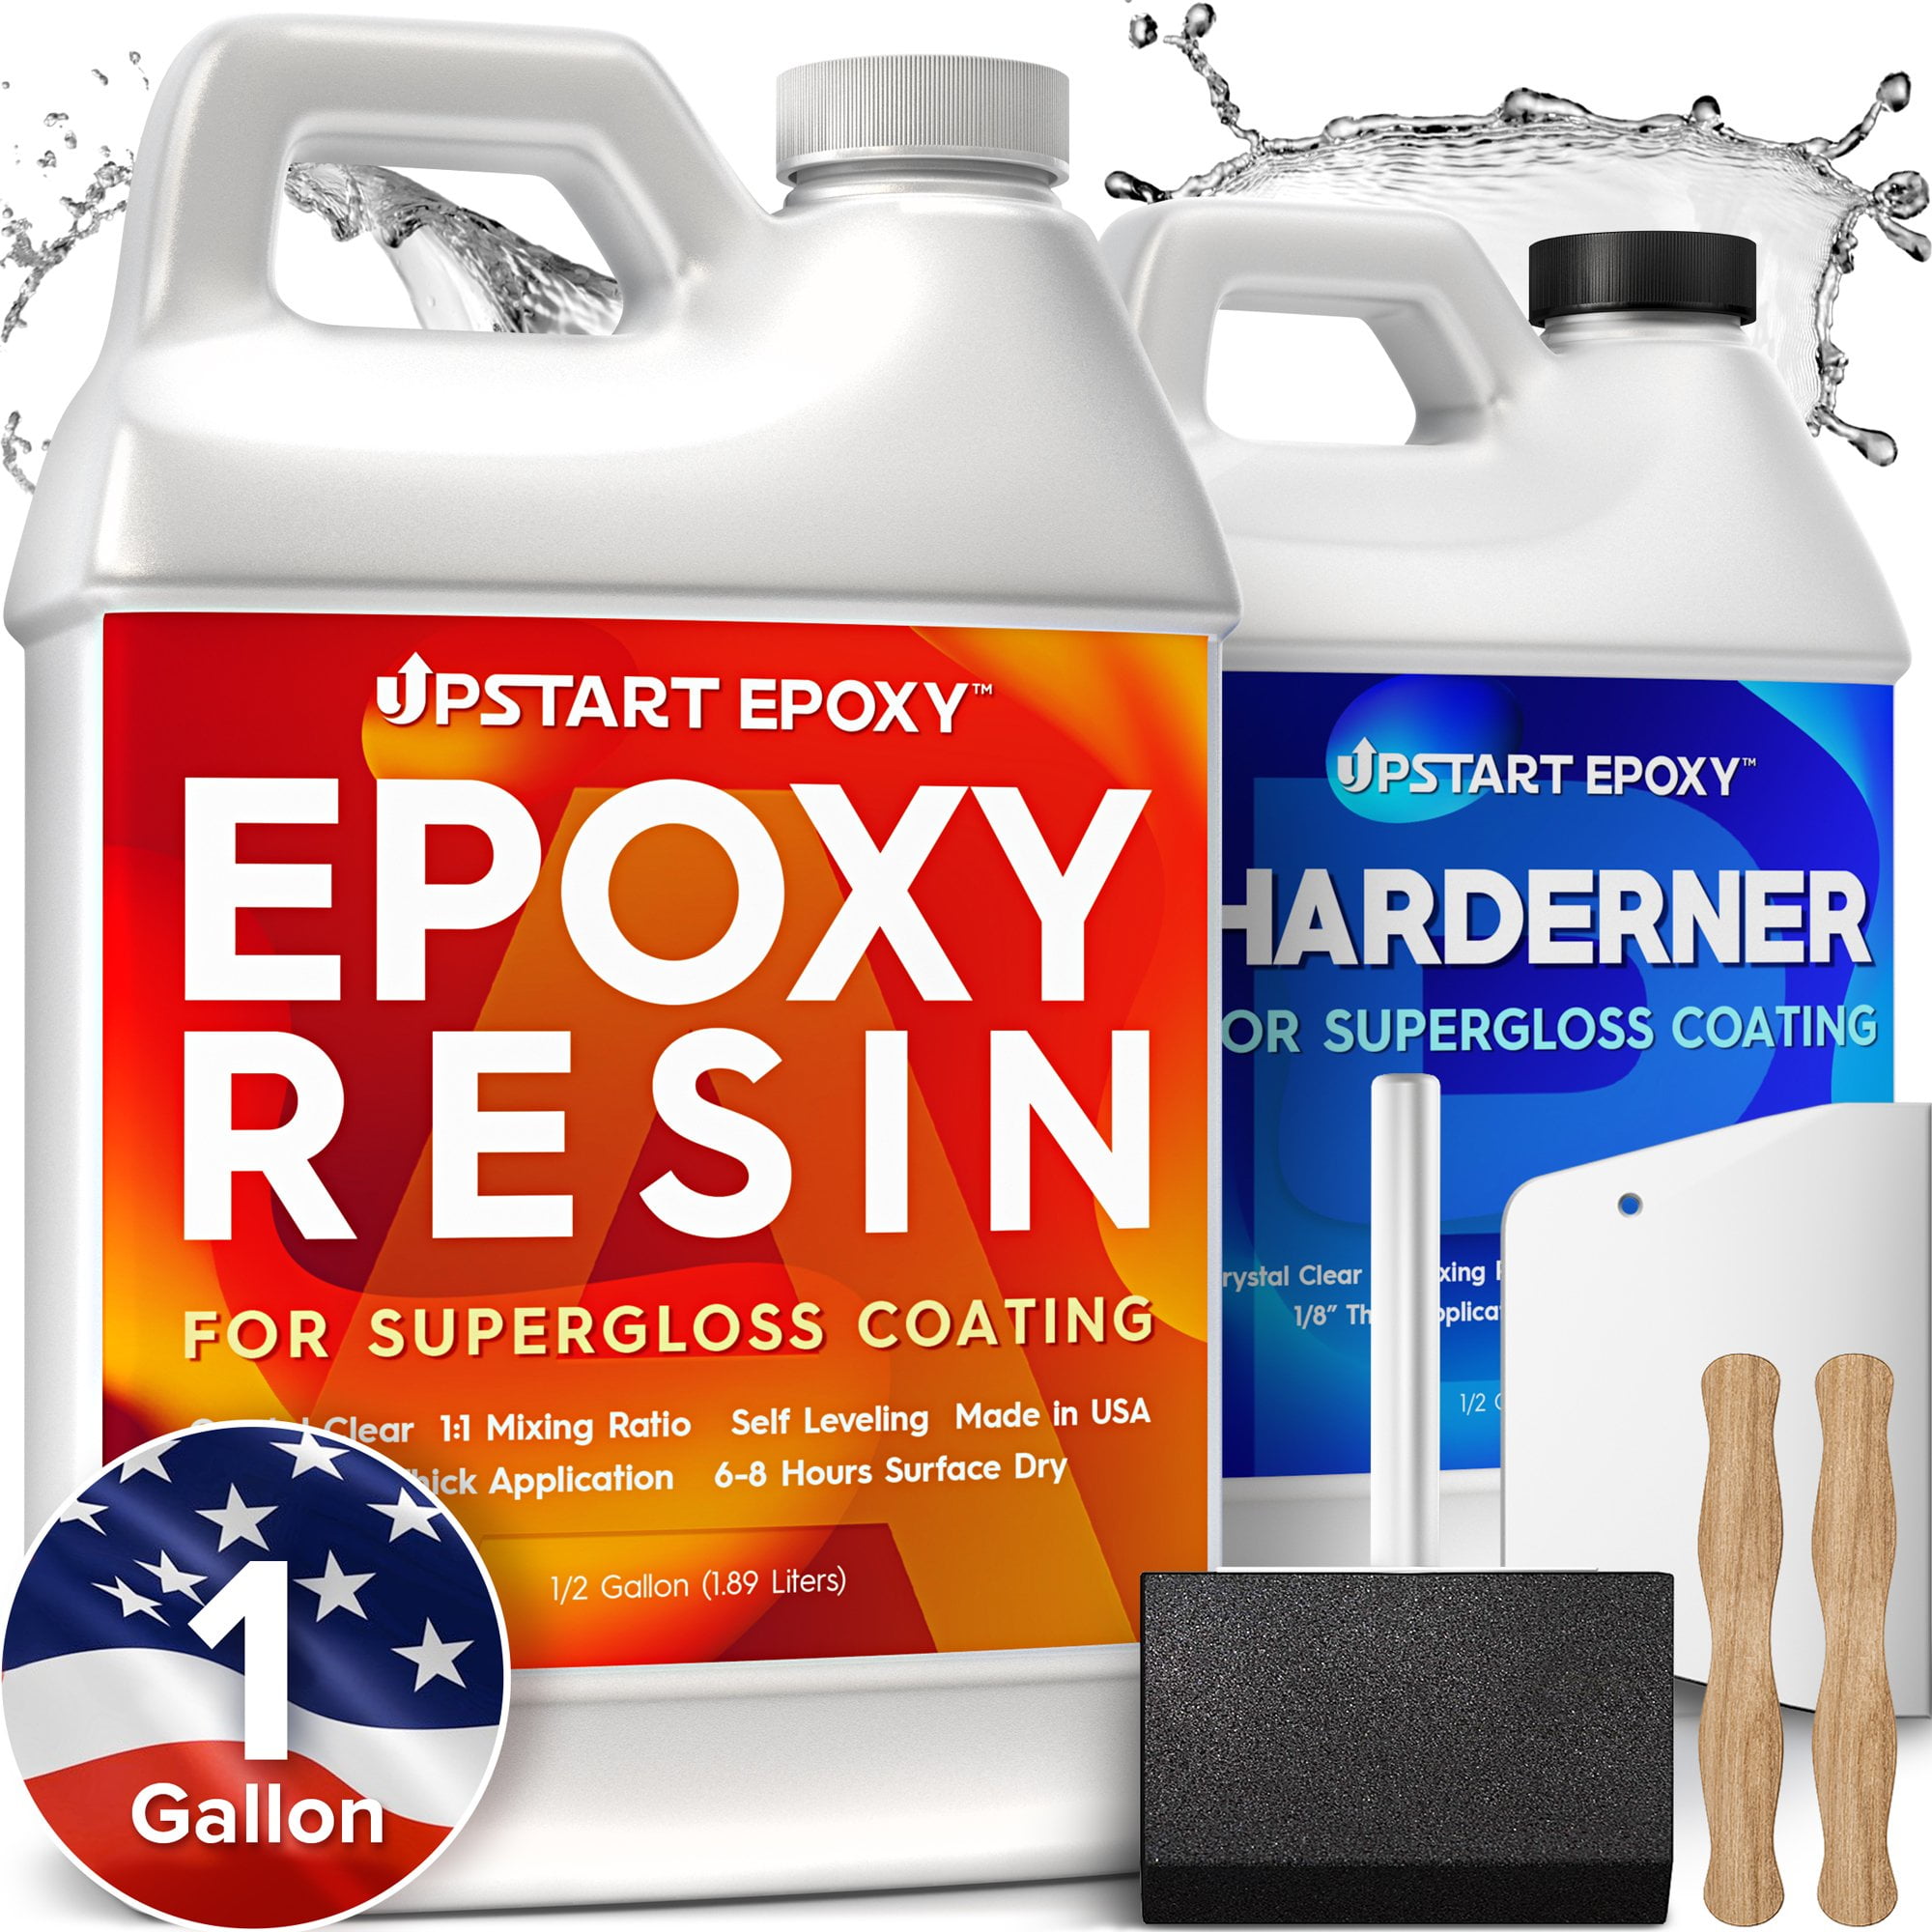 EpoFood Colourless Epoxy Food Resin Kit 